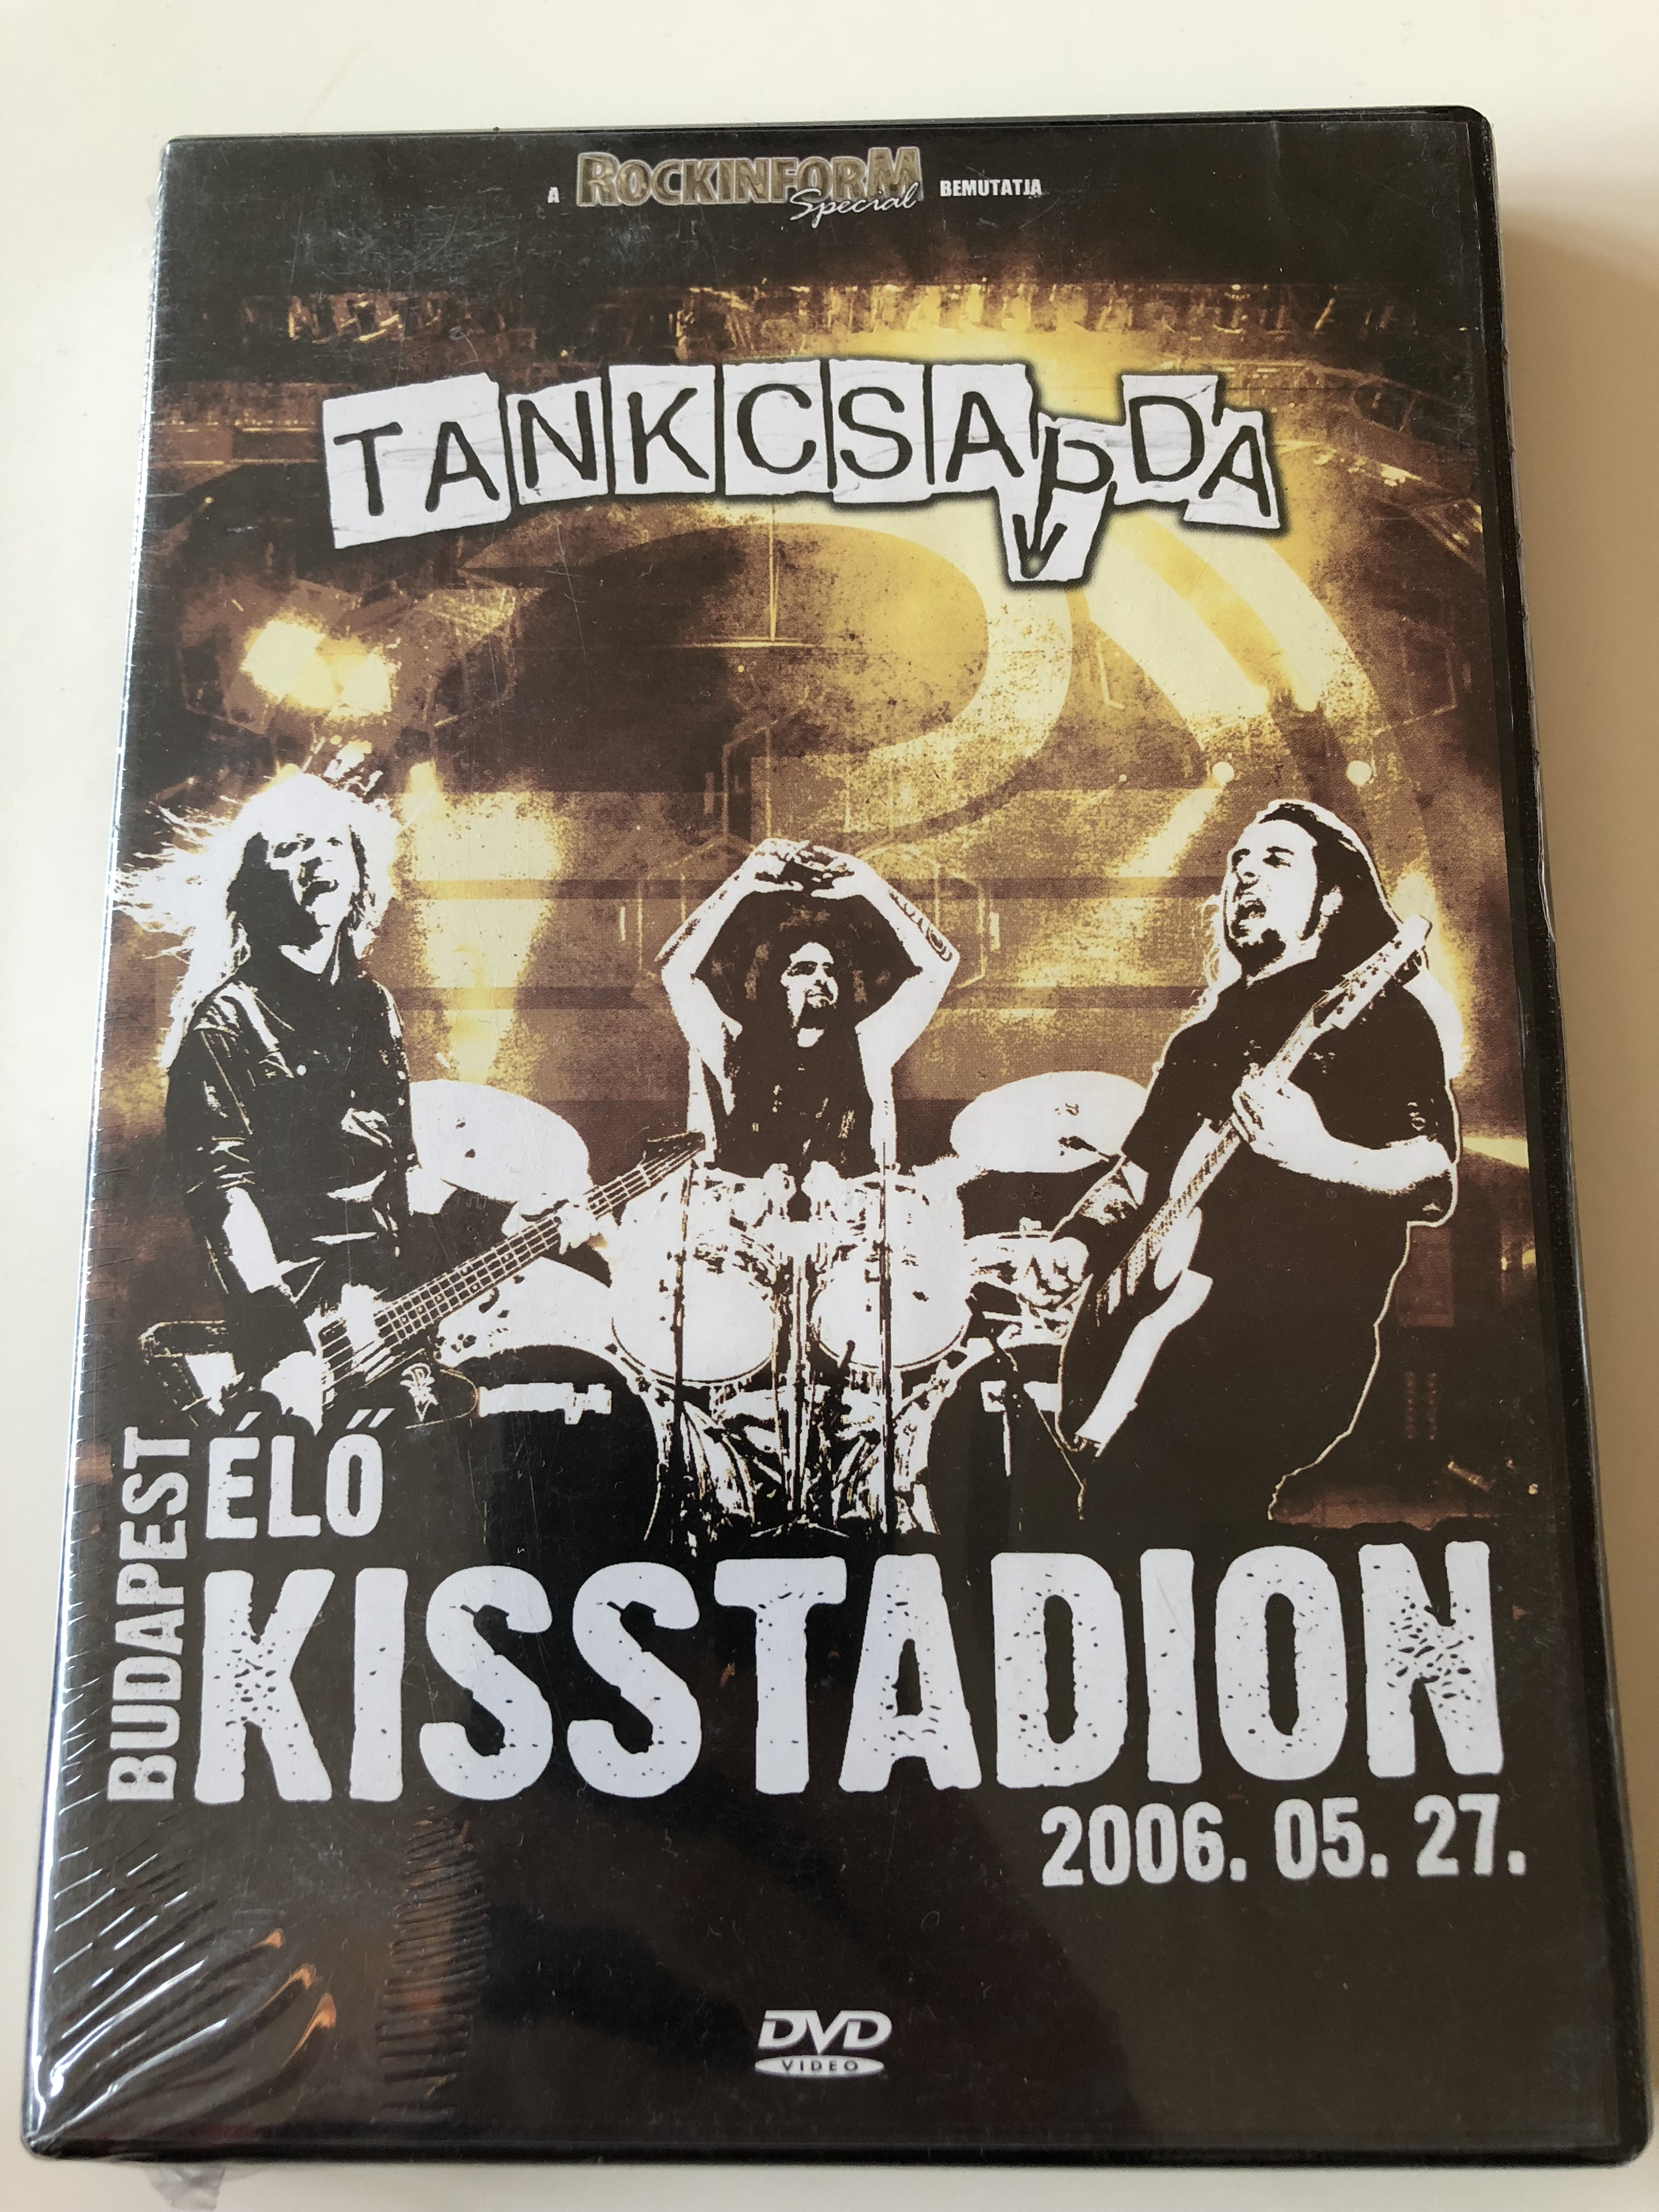 tankcsapda-l-budapest-kisstadion-2006.05.27-dvd-2006-live-concert-1-.jpg